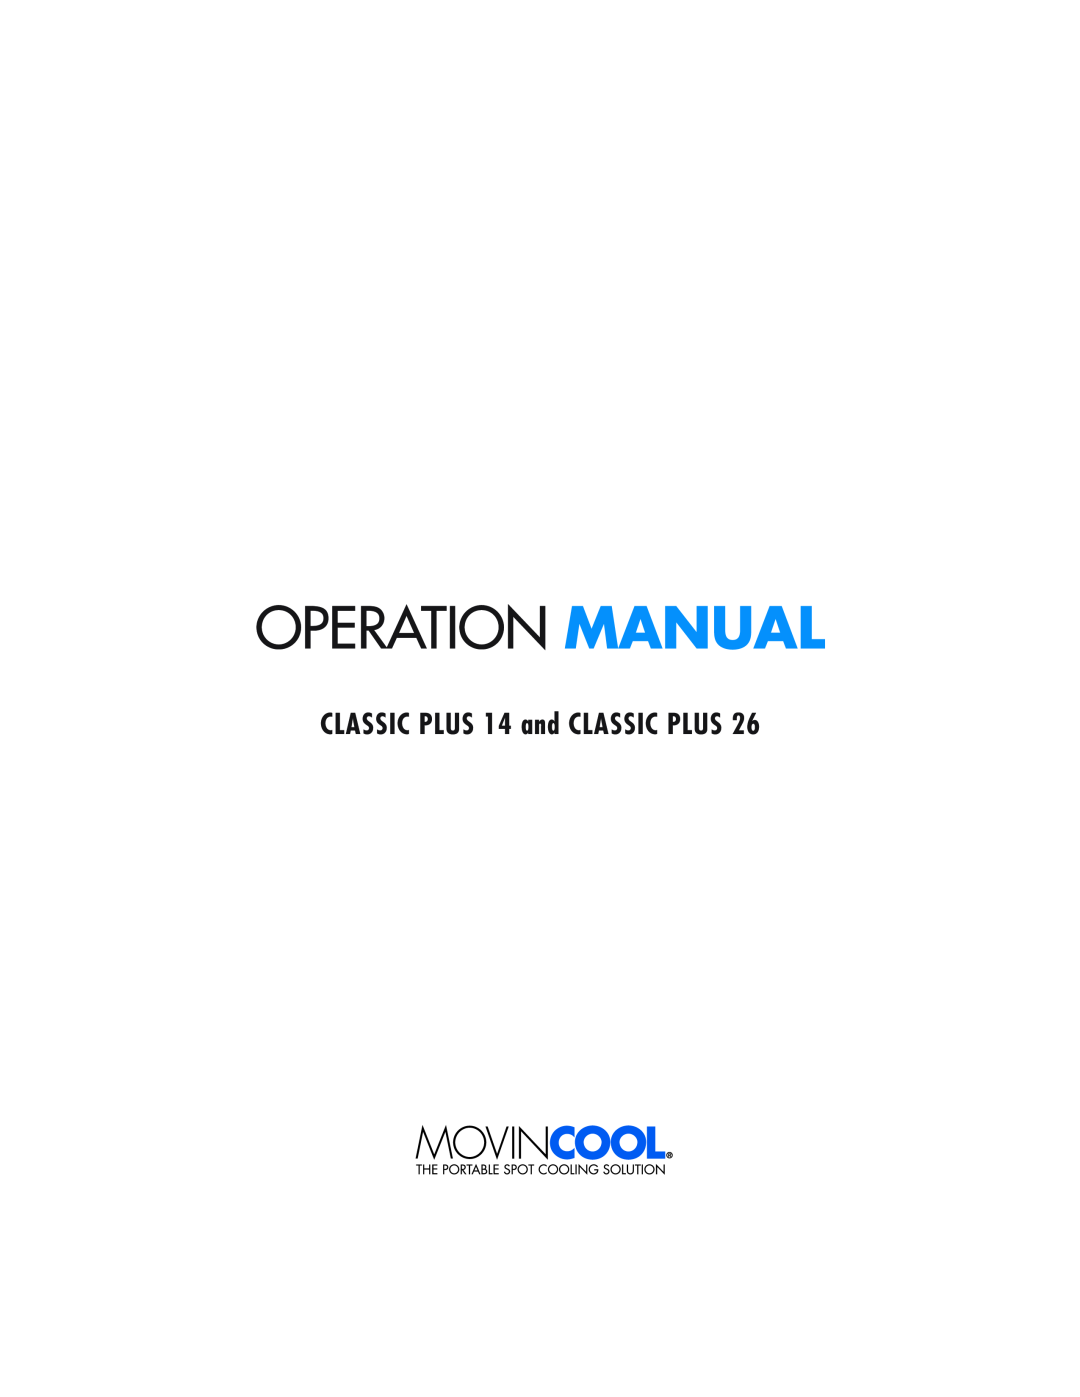 Denso CLASSIC PLUS 26 operation manual CLASSIC PLUS 14 and CLASSIC PLUS 